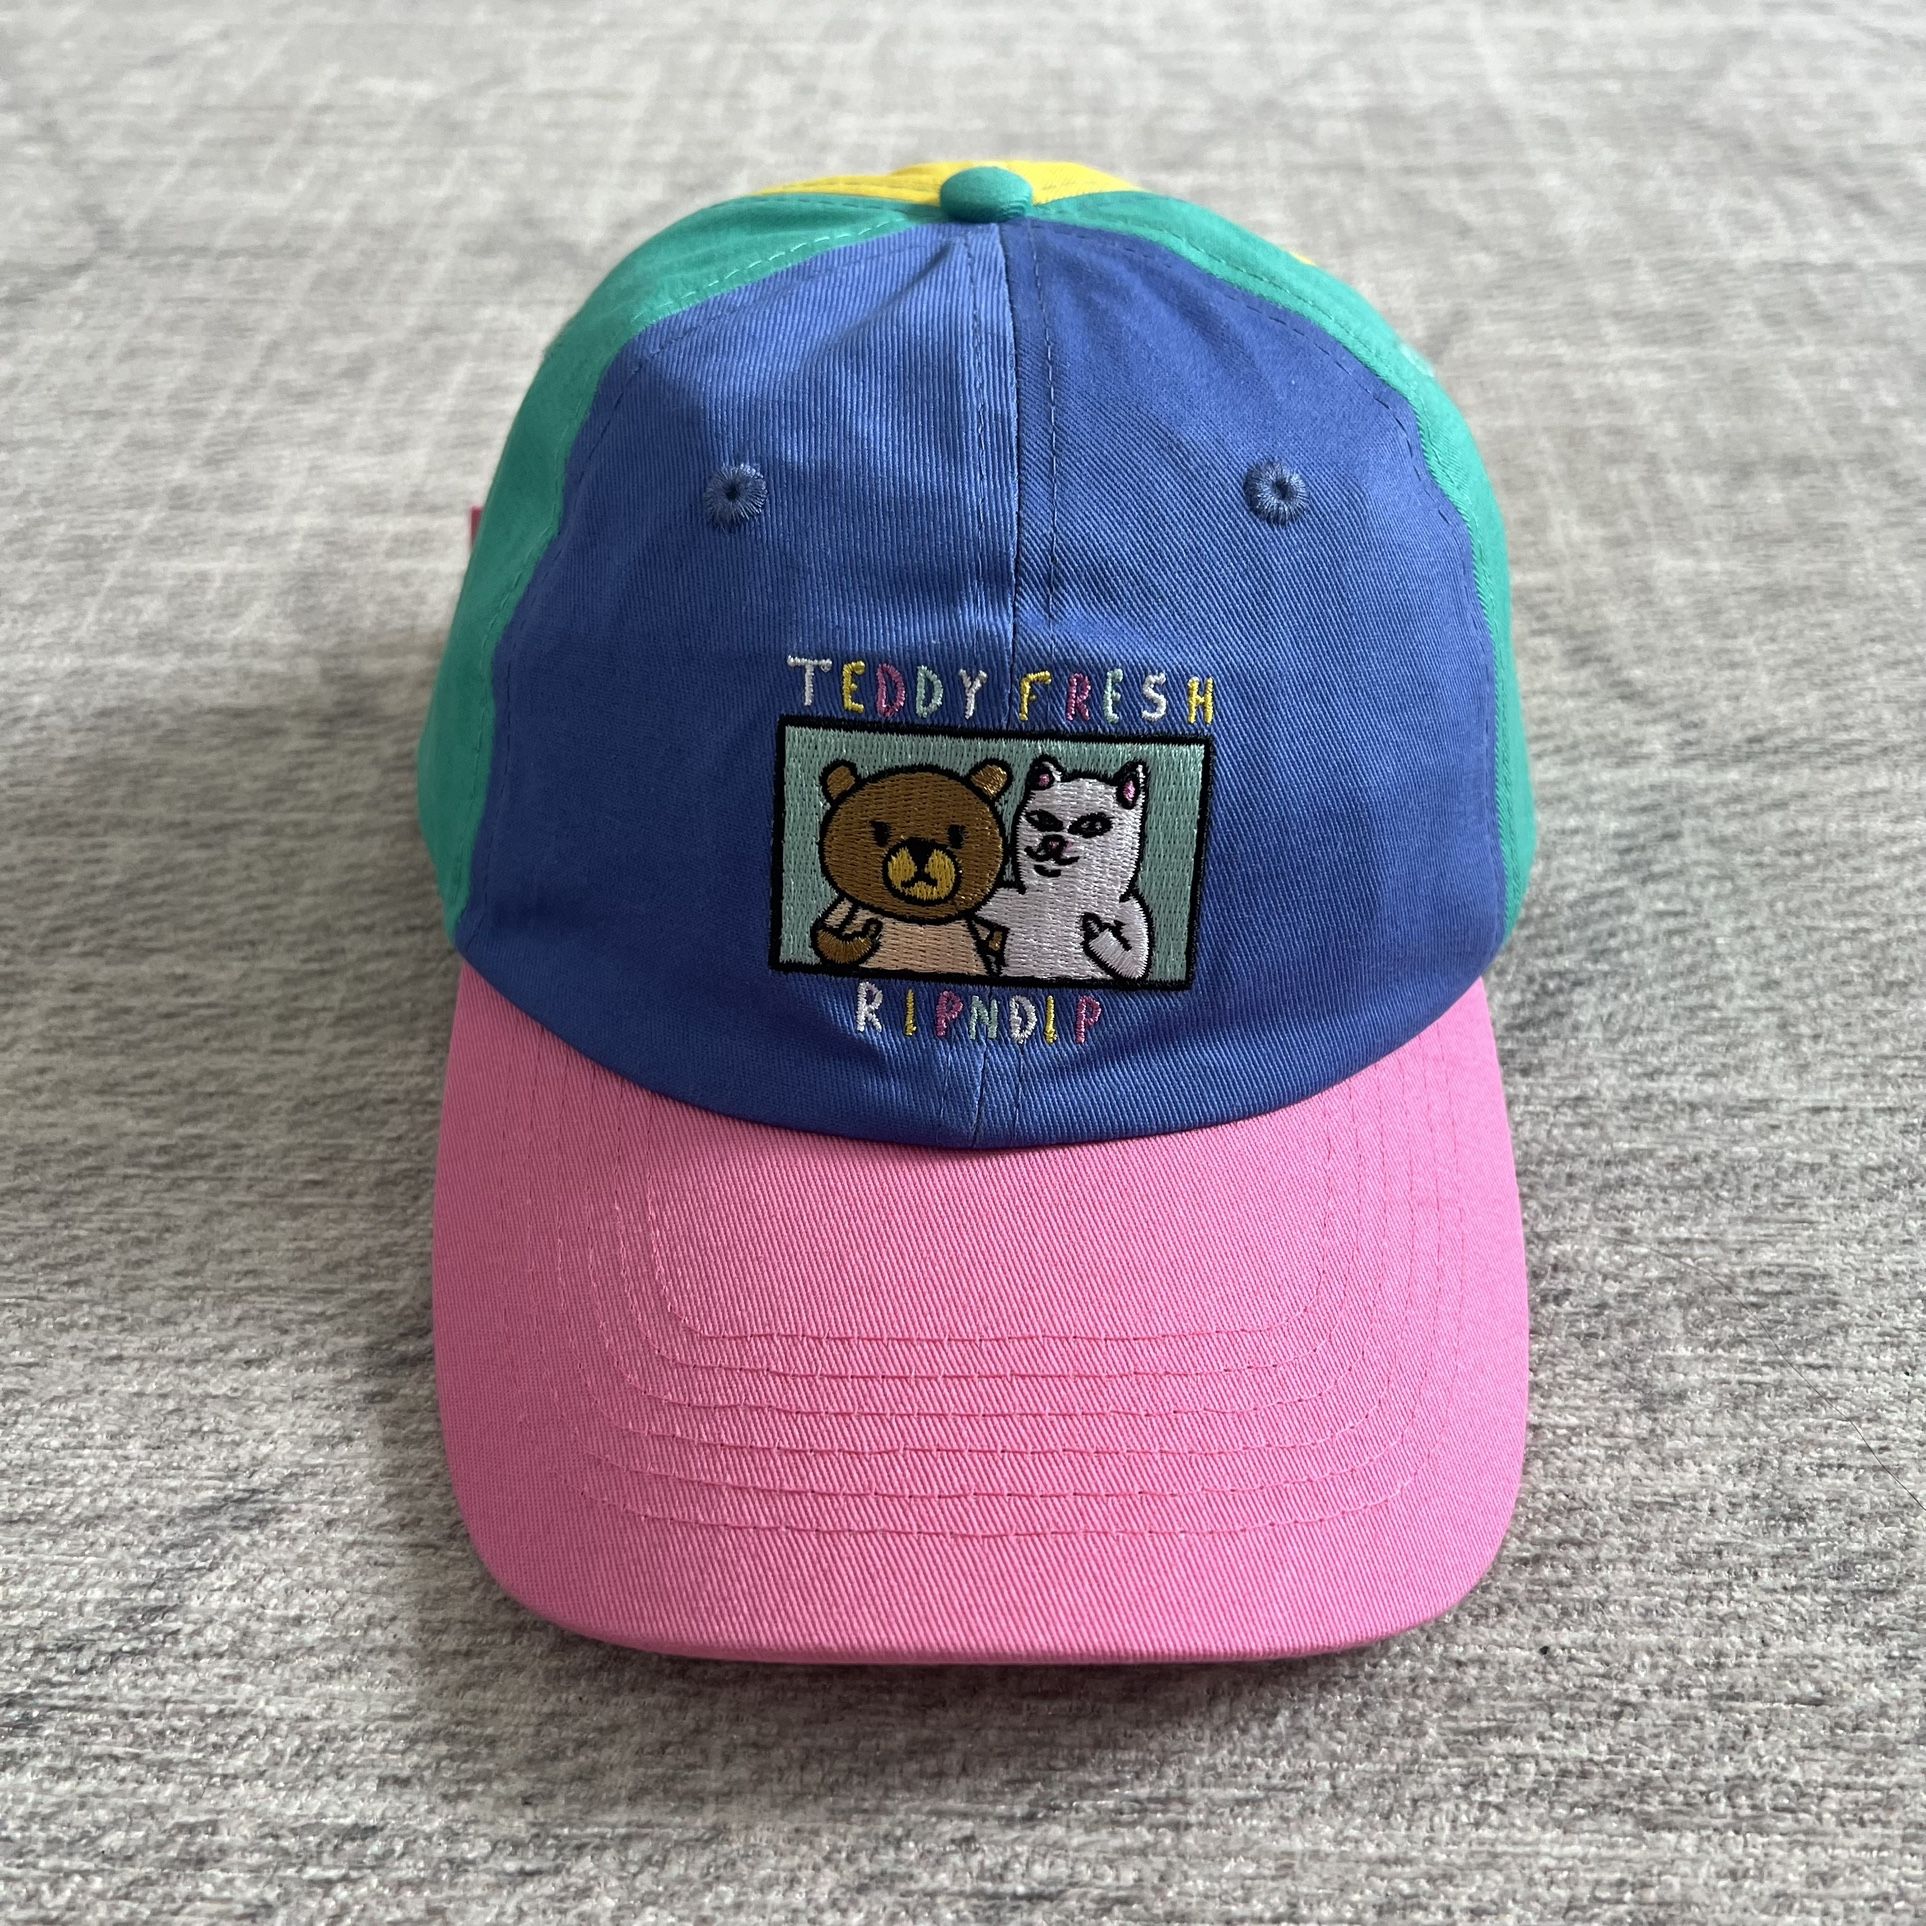 Teddy Fresh x RipNdip Zumiez Men’s Color Block Skater Adjustable Dad Hat